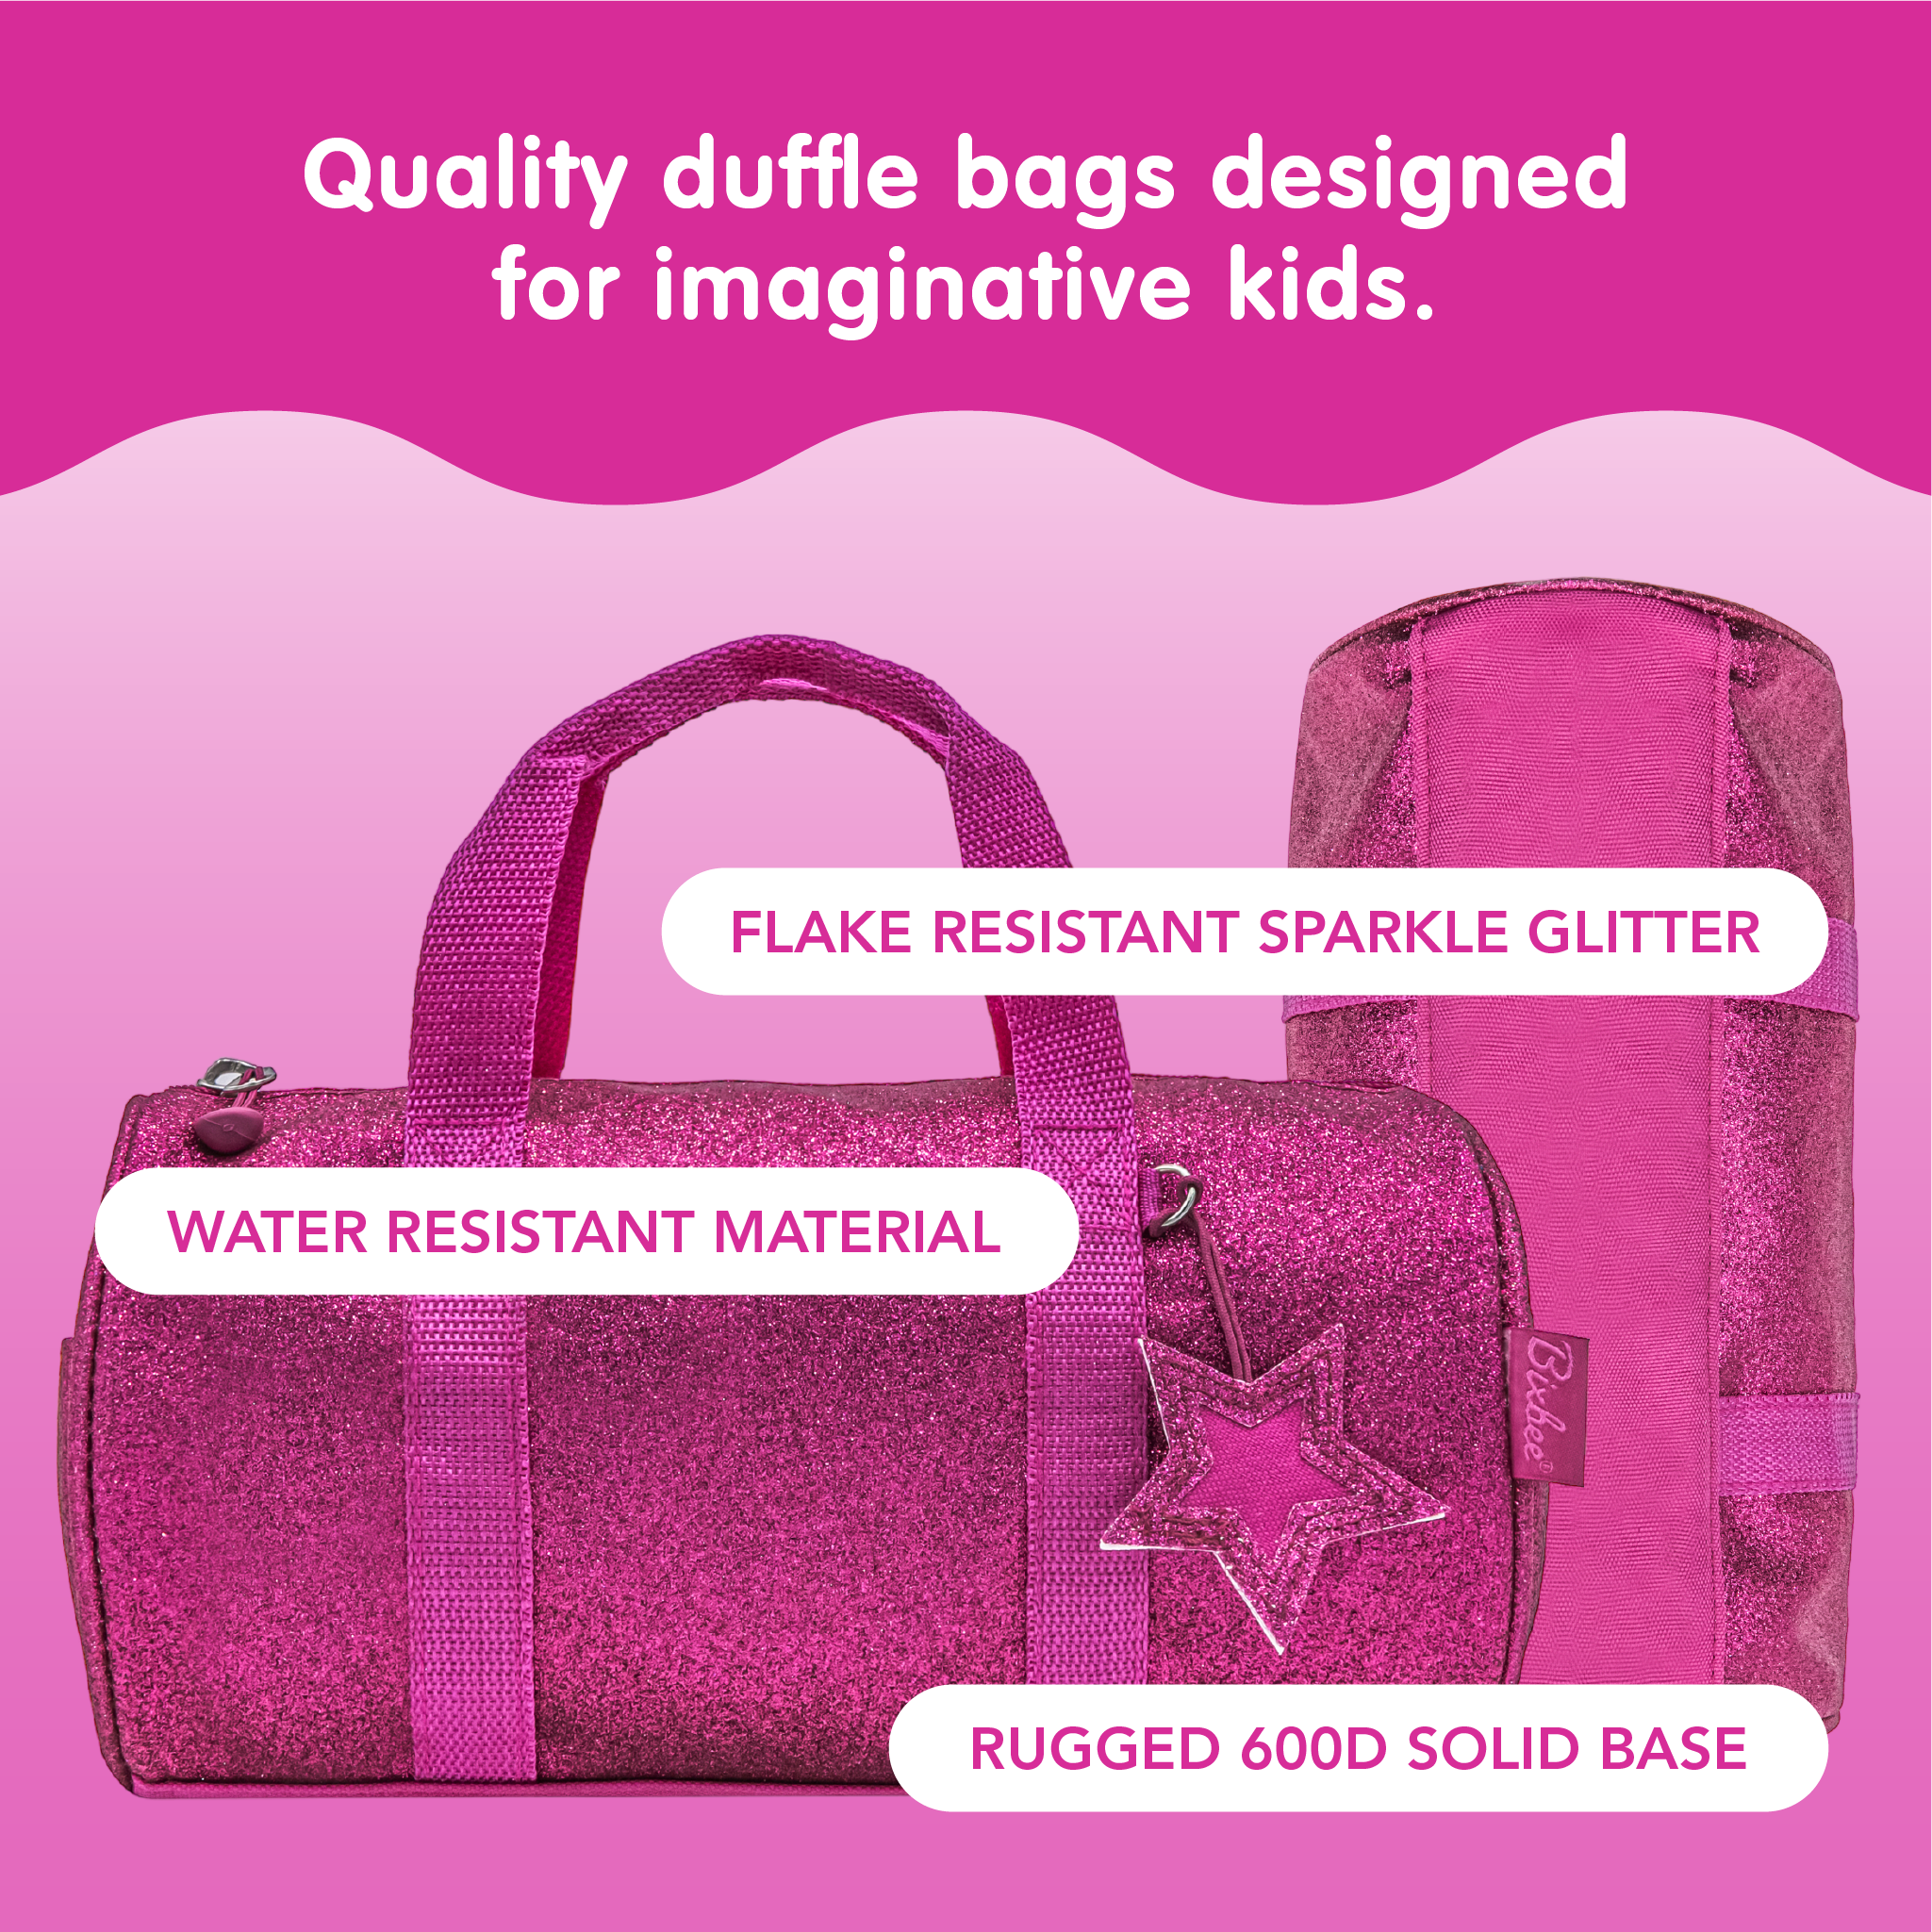 Kids Duffle Bags, Sparkalicious™ Pink Duffles